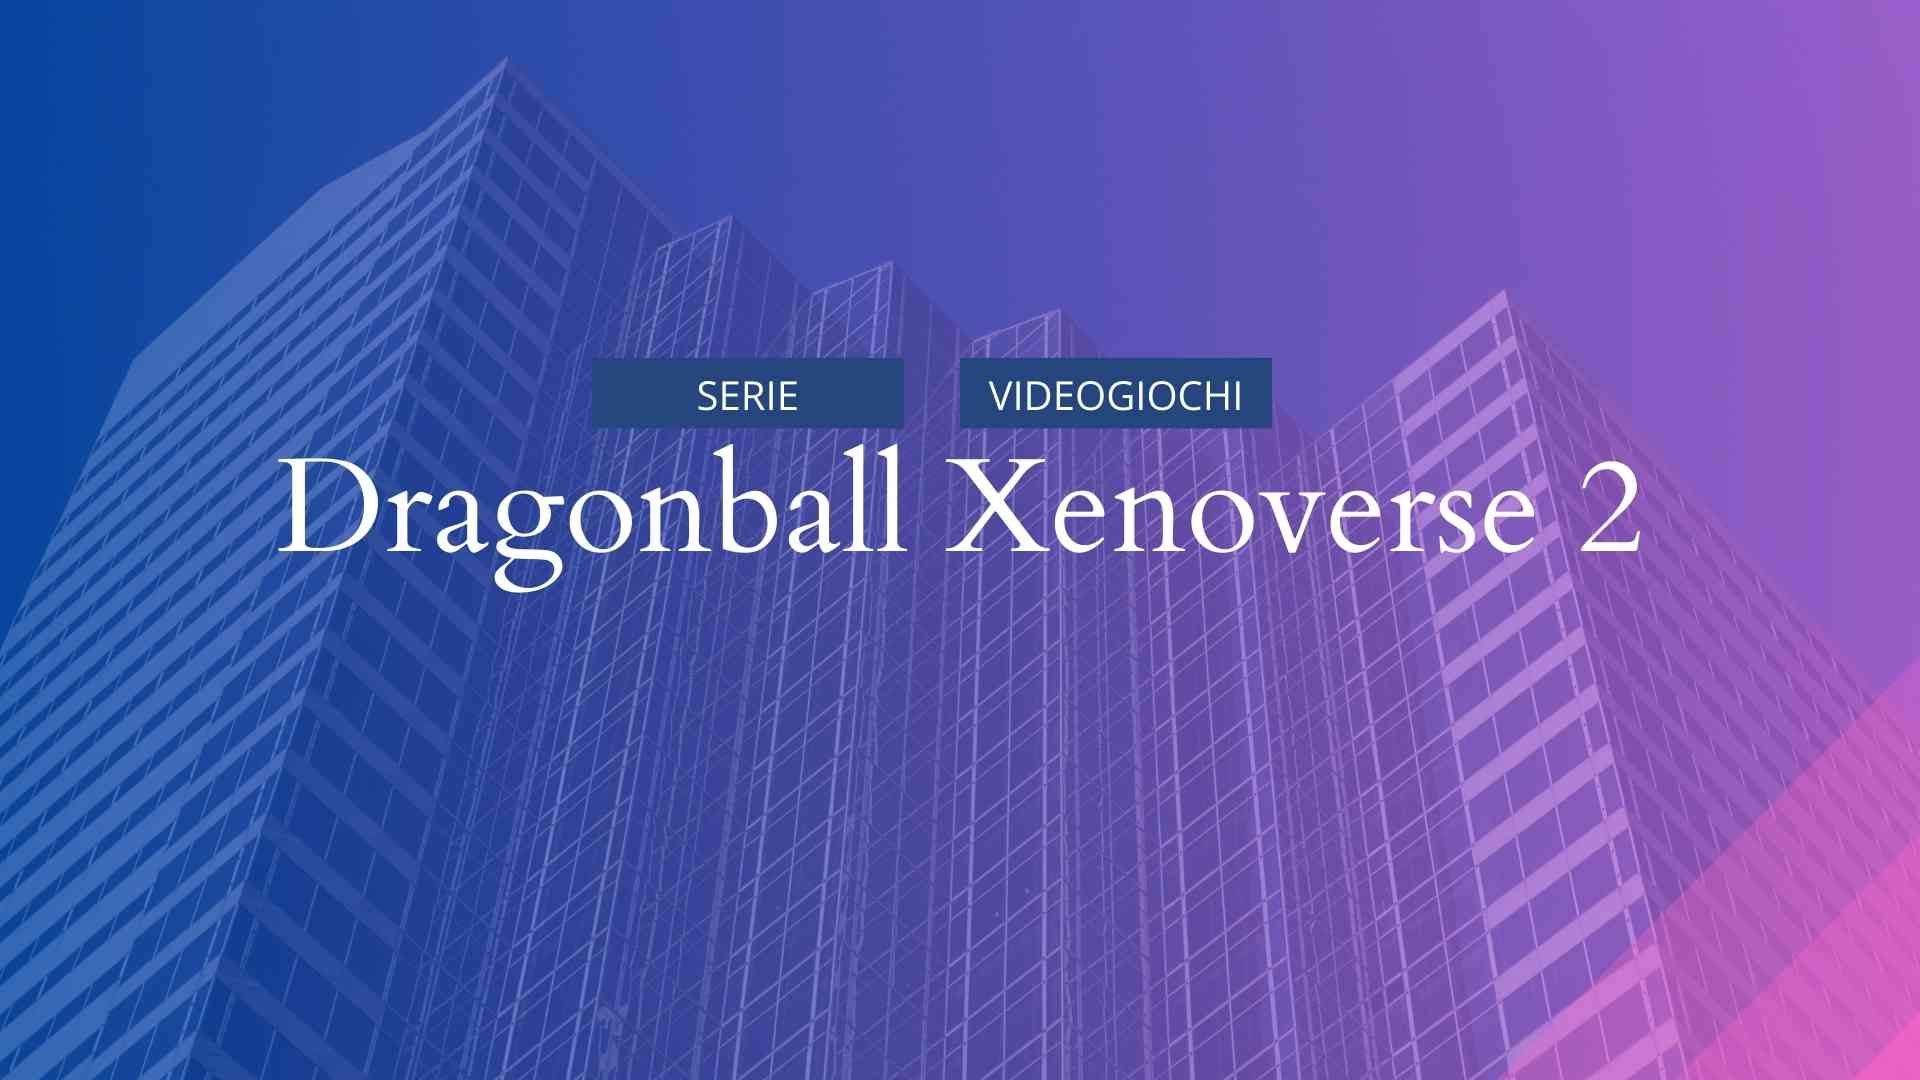 Dragonball Xenoverse 2